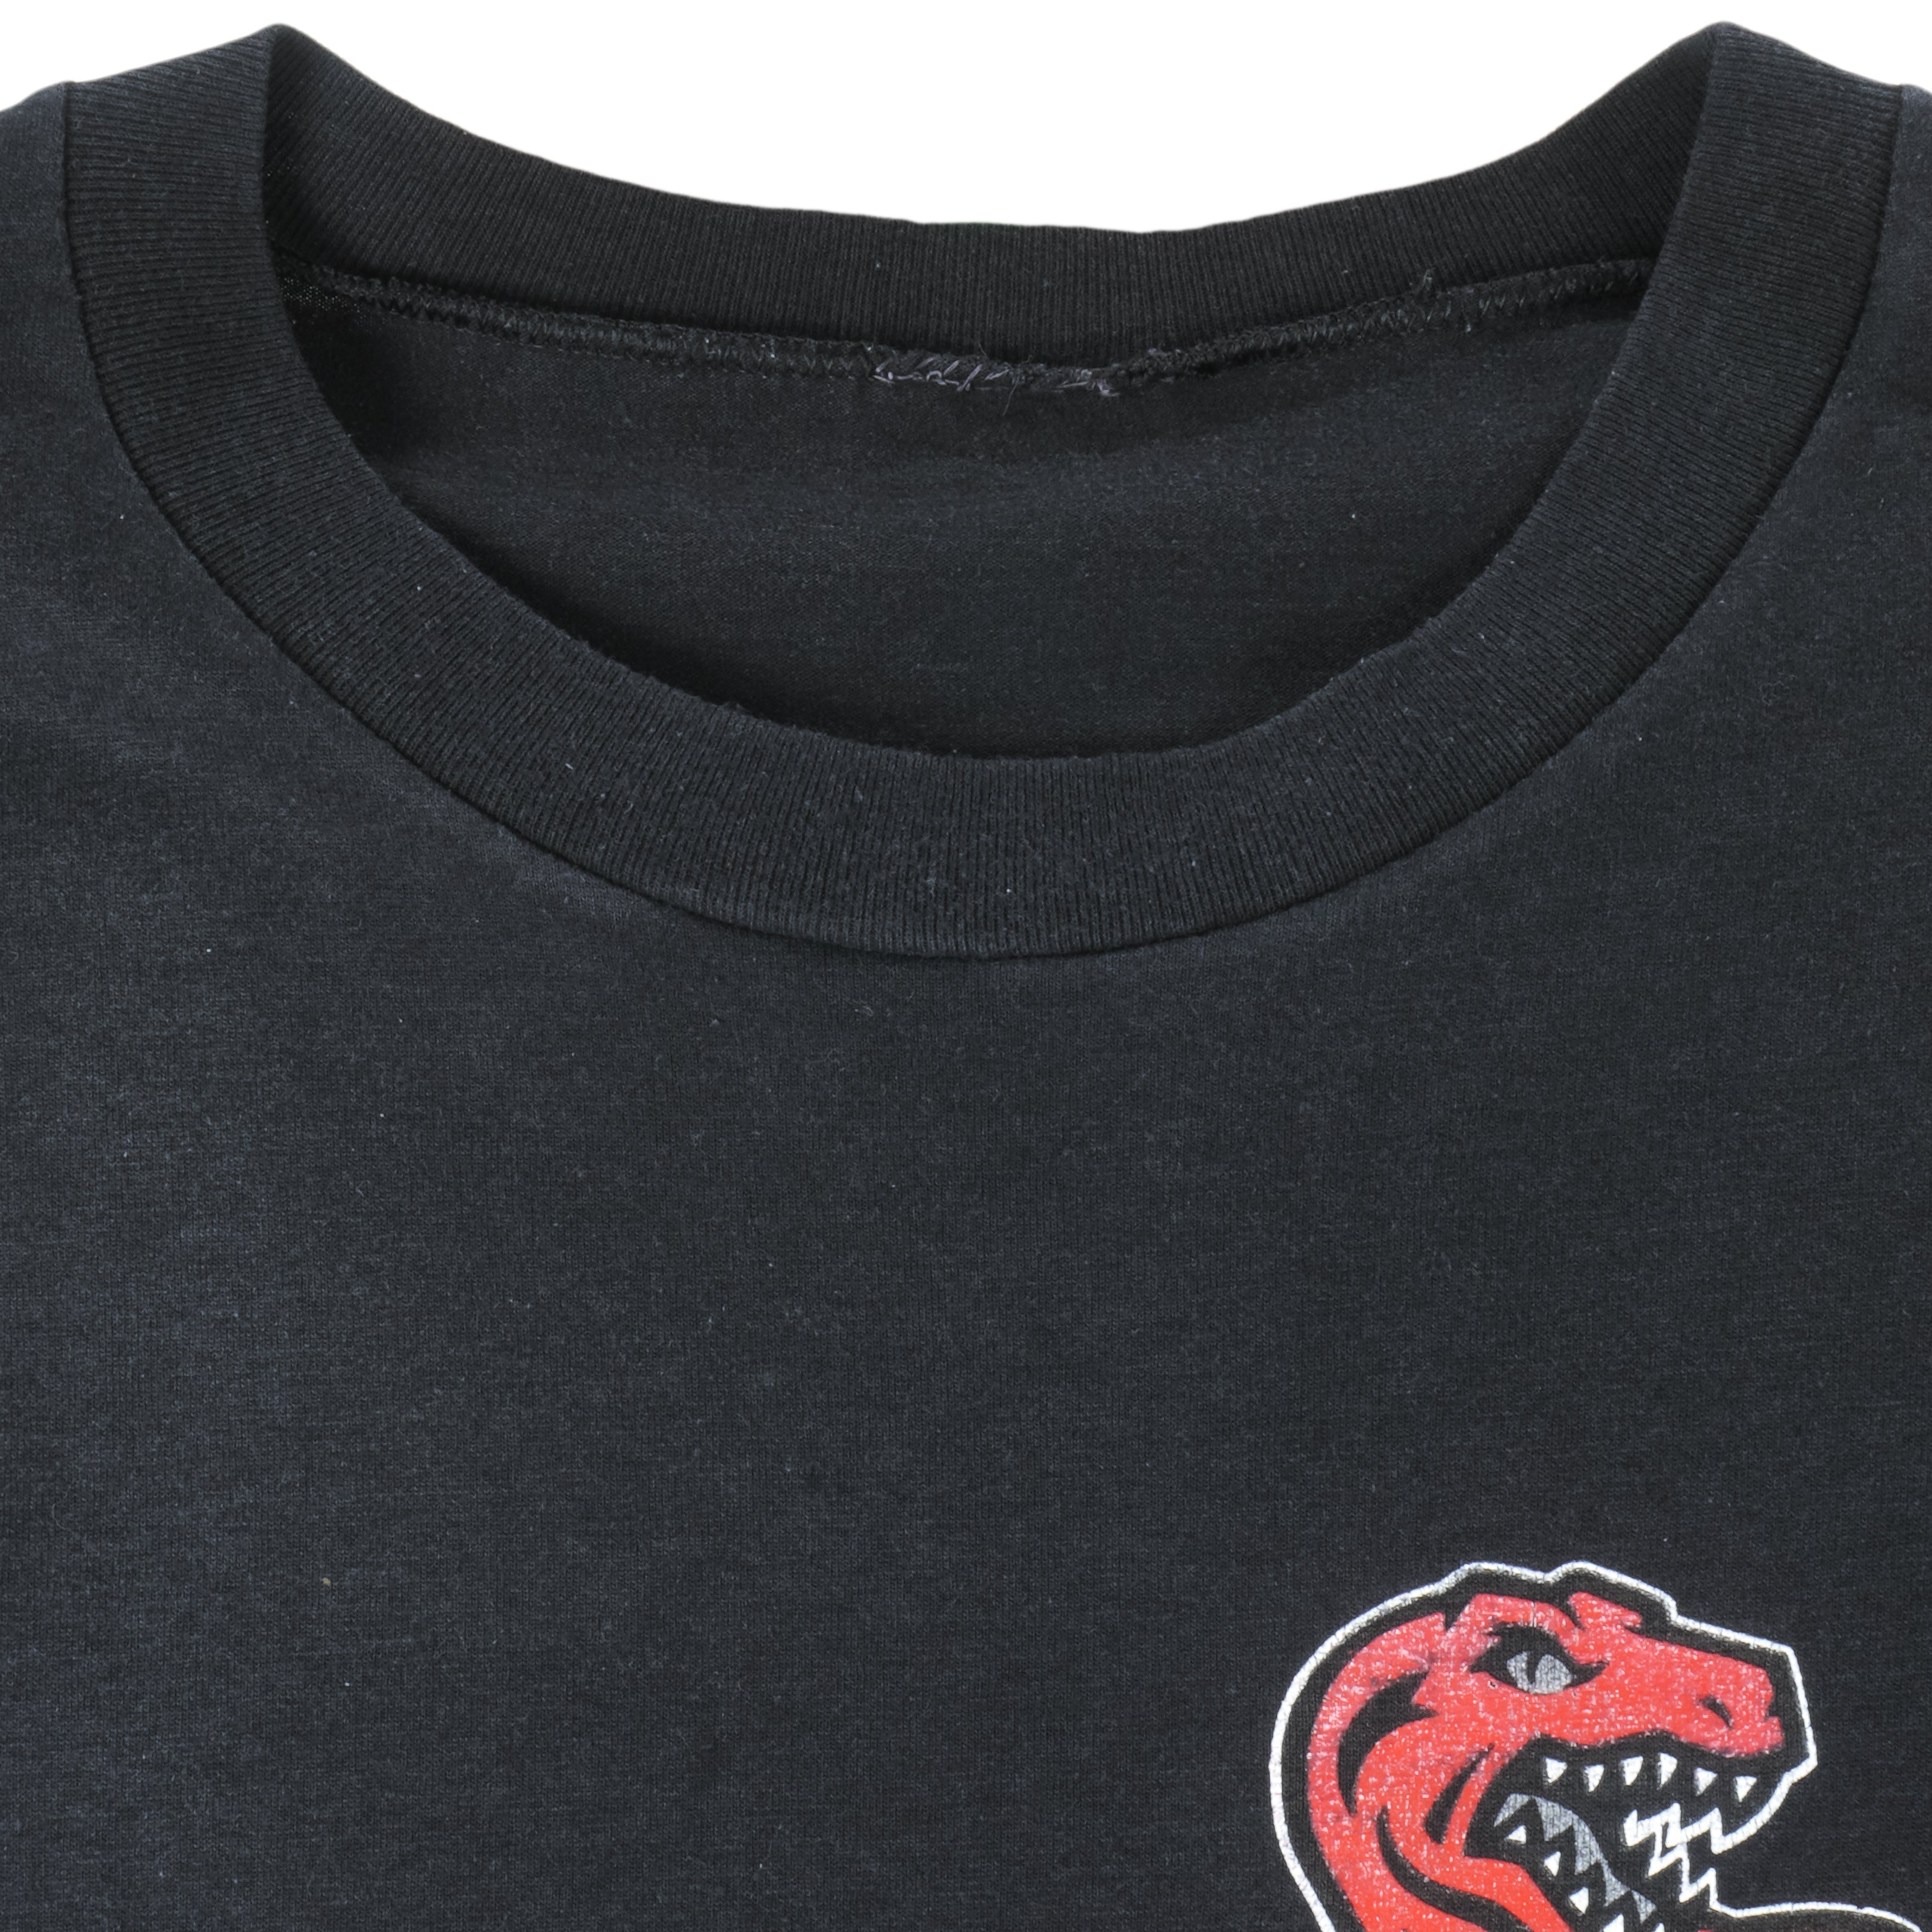 Toronto Raptors Shirt, Vintage Nba Basketball Unisex T-shirt Long Sleeve